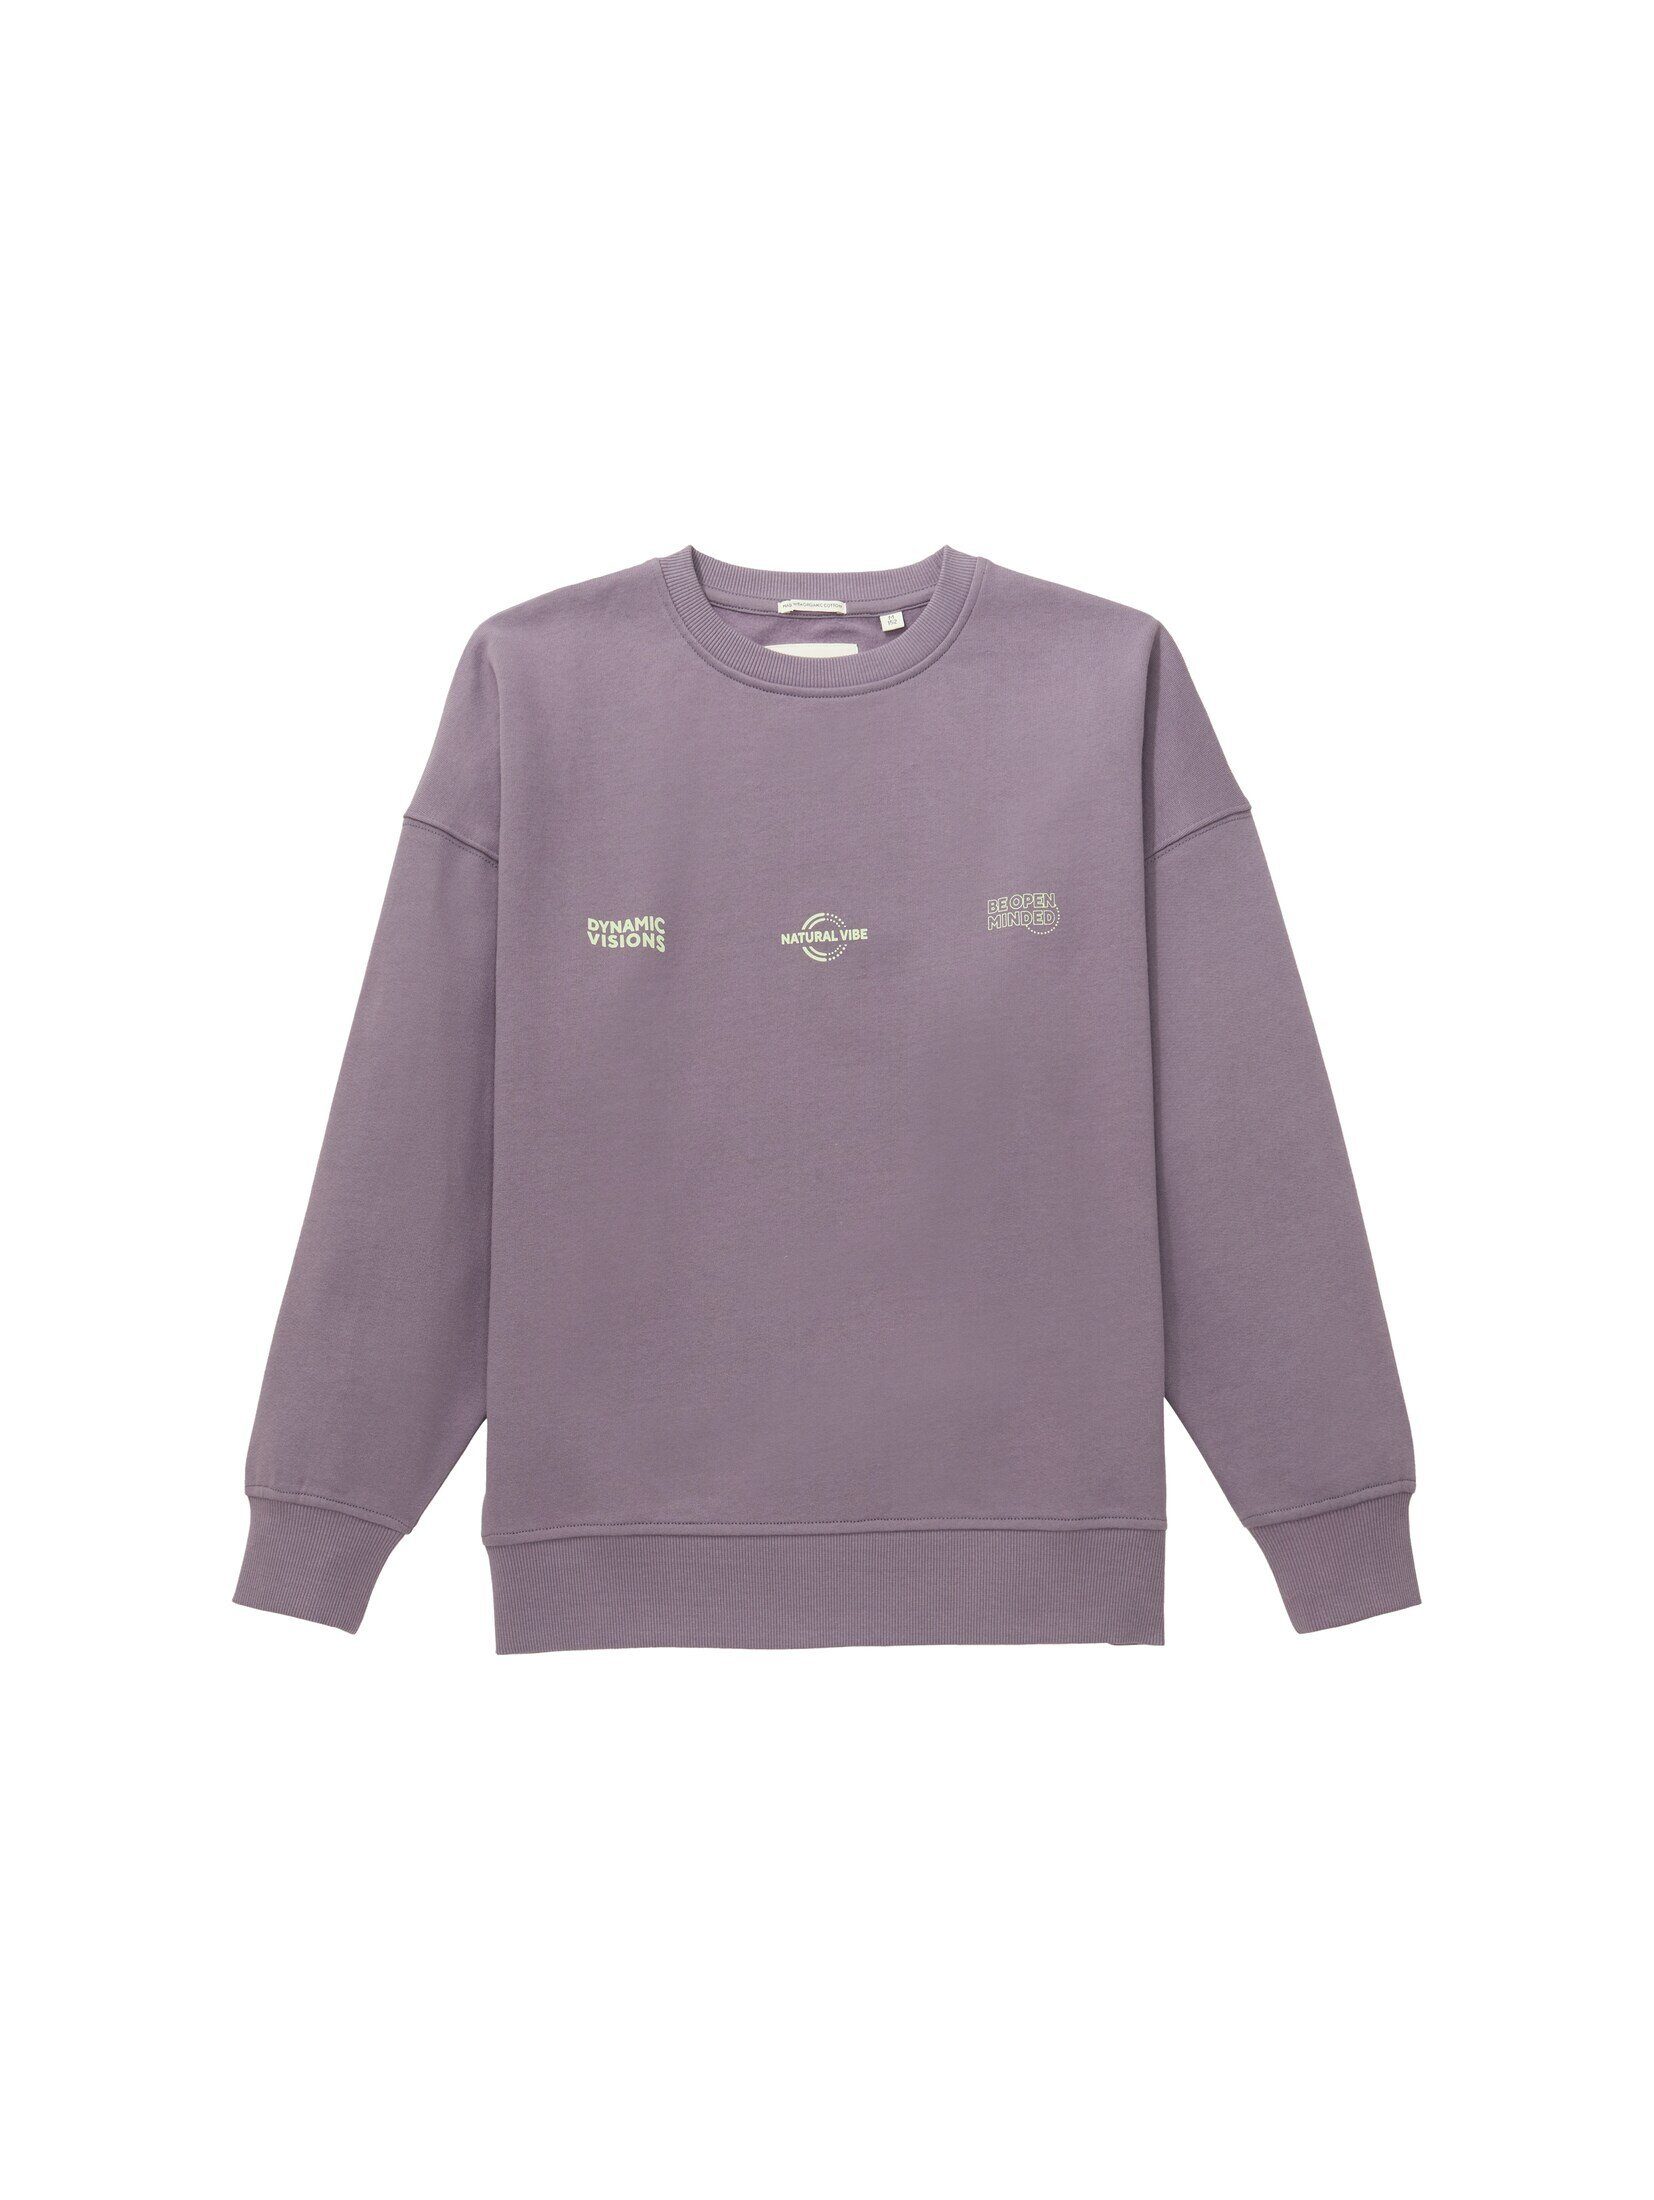 TOM TAILOR Hoodie Oversized Sweatshirt mit Bio-Baumwolle greyish purple